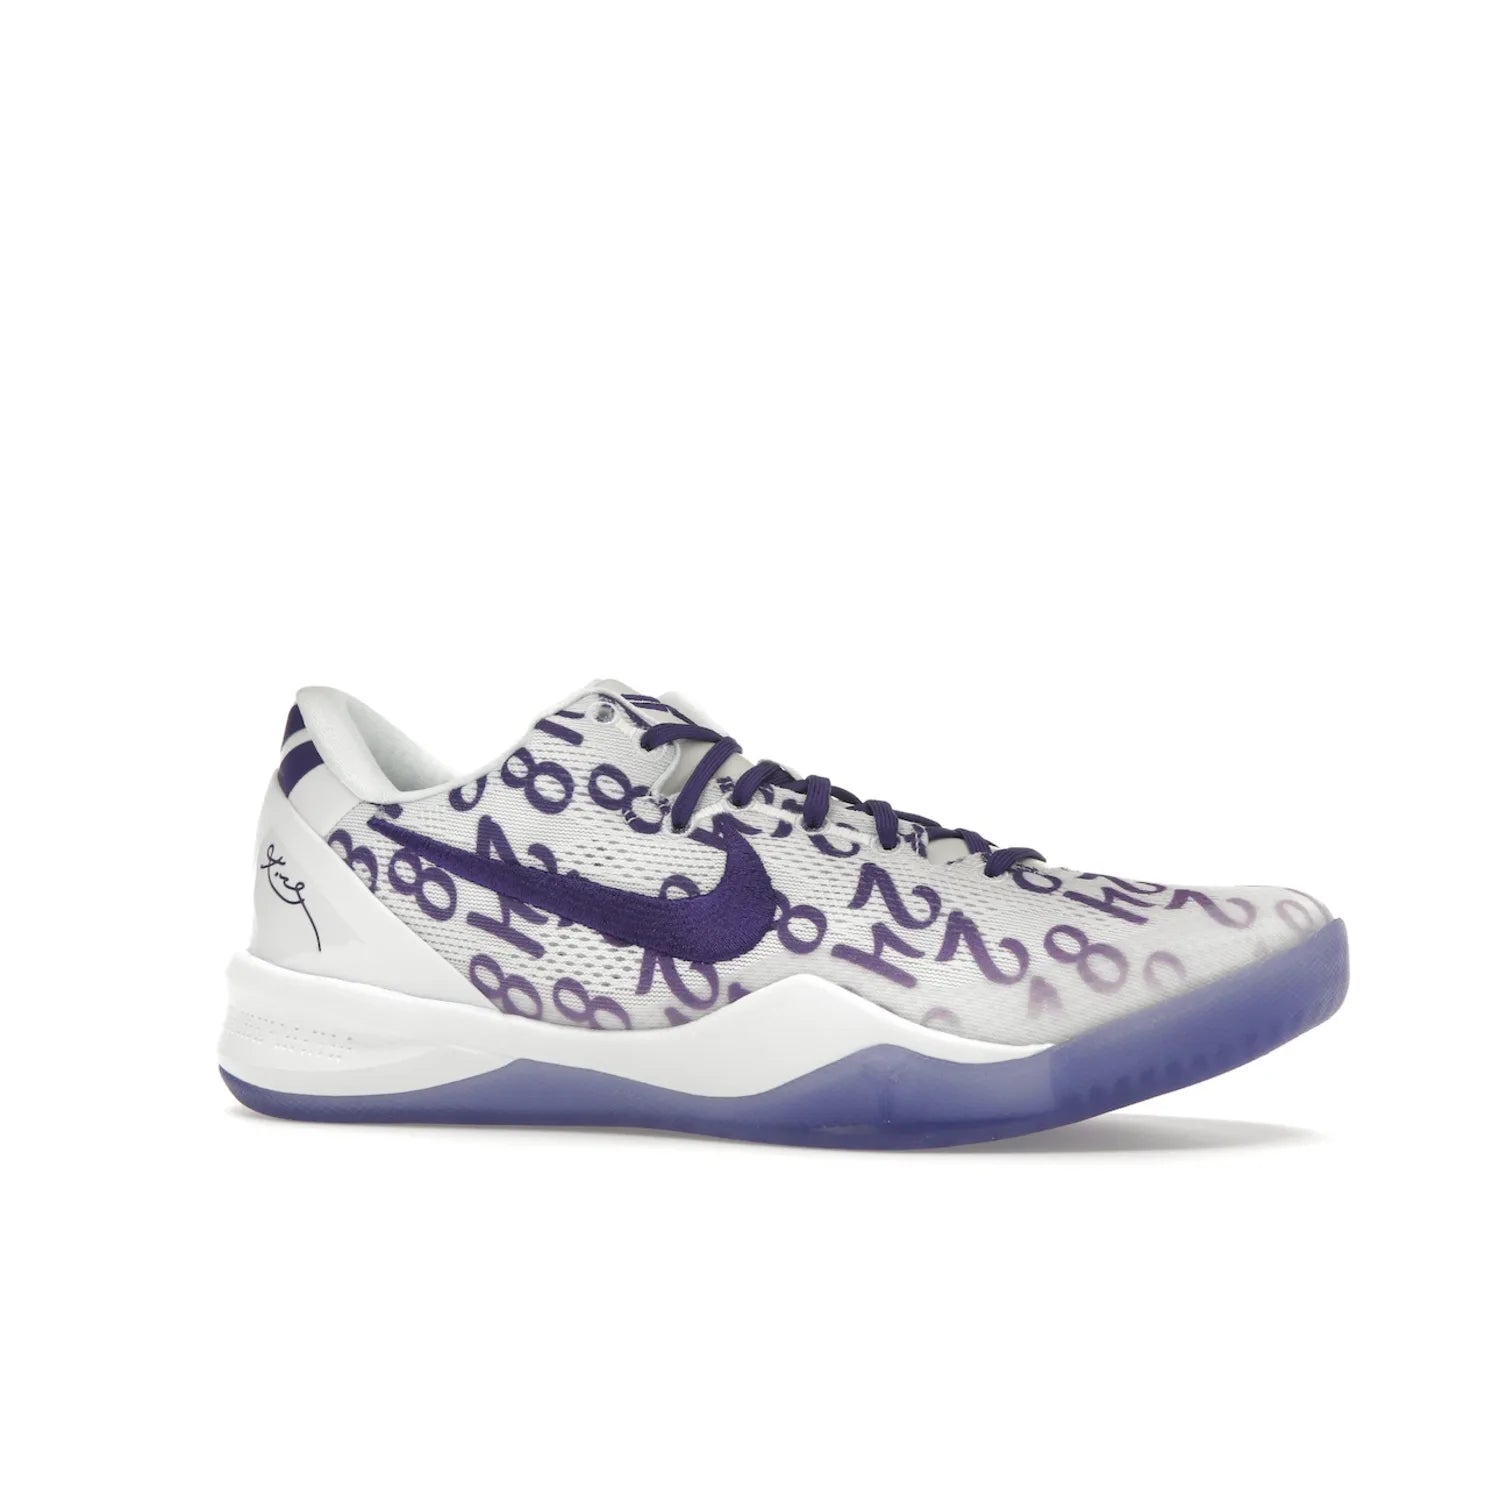 Nike Kobe 8 Protro Court Purple - Image 3 - Only at www.BallersClubKickz.com - 